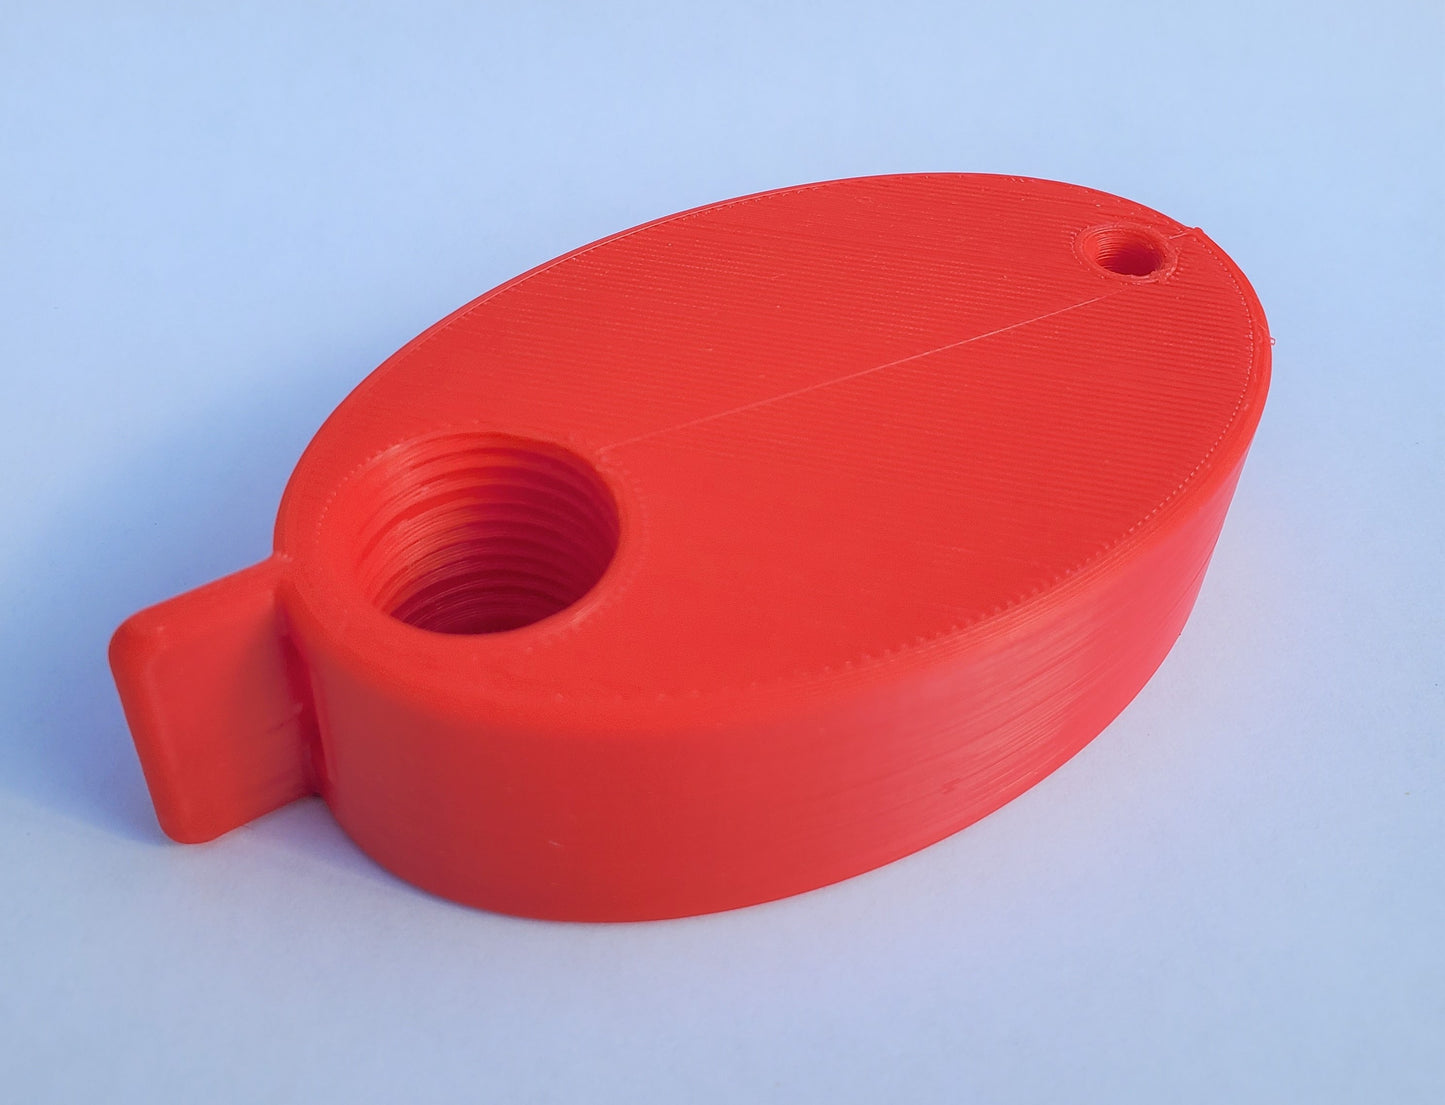 PlugKeyper Plug Float - red - boat drain plug reminder - key float - locks key in device using plug